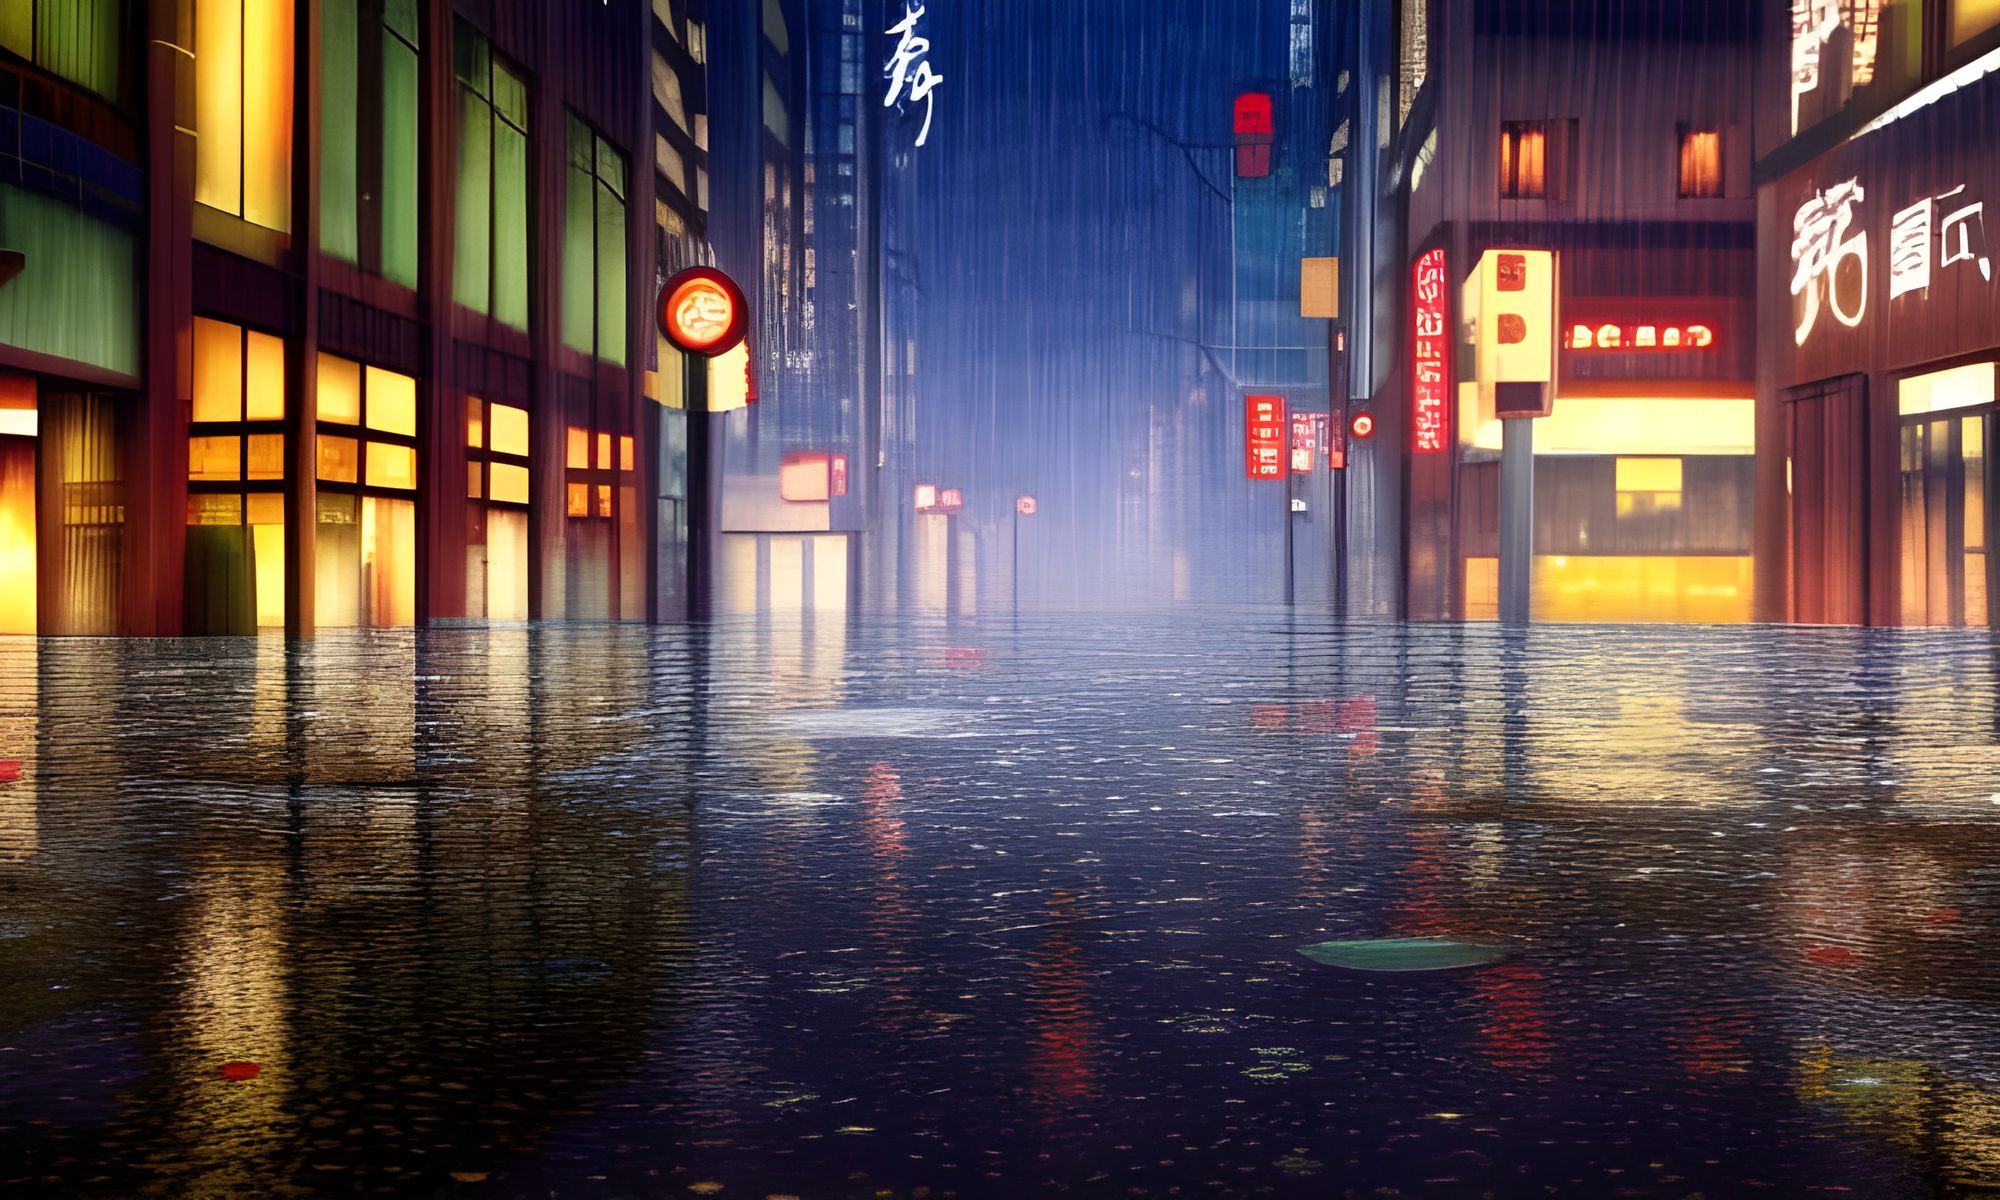 anime rain drops